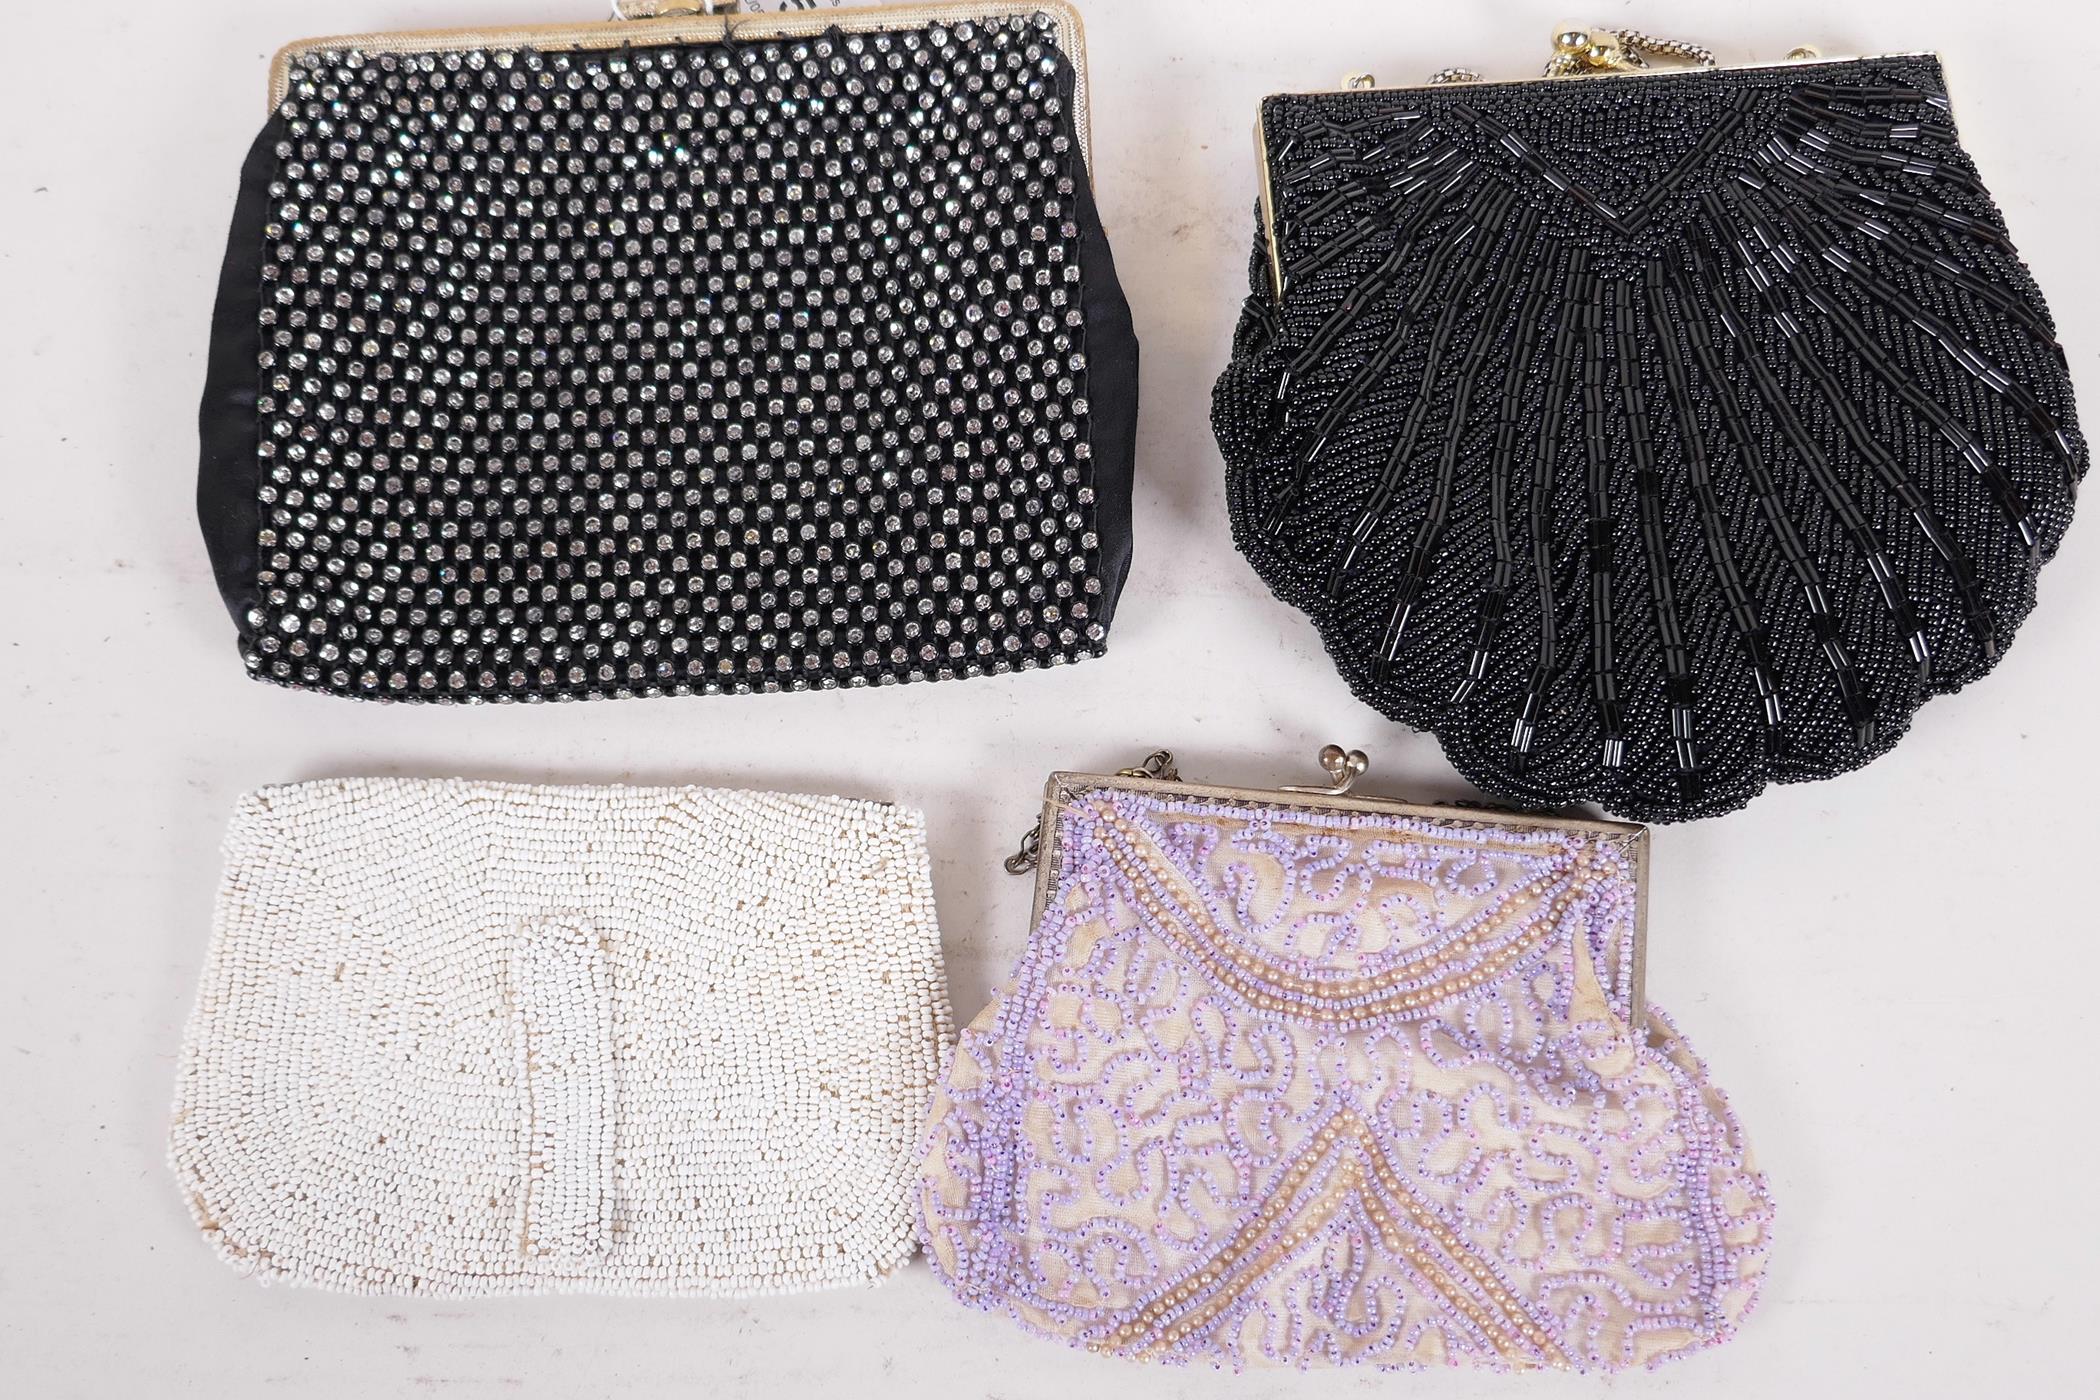 A vintage diamante purse, 6" x 5", and three beadwork purses